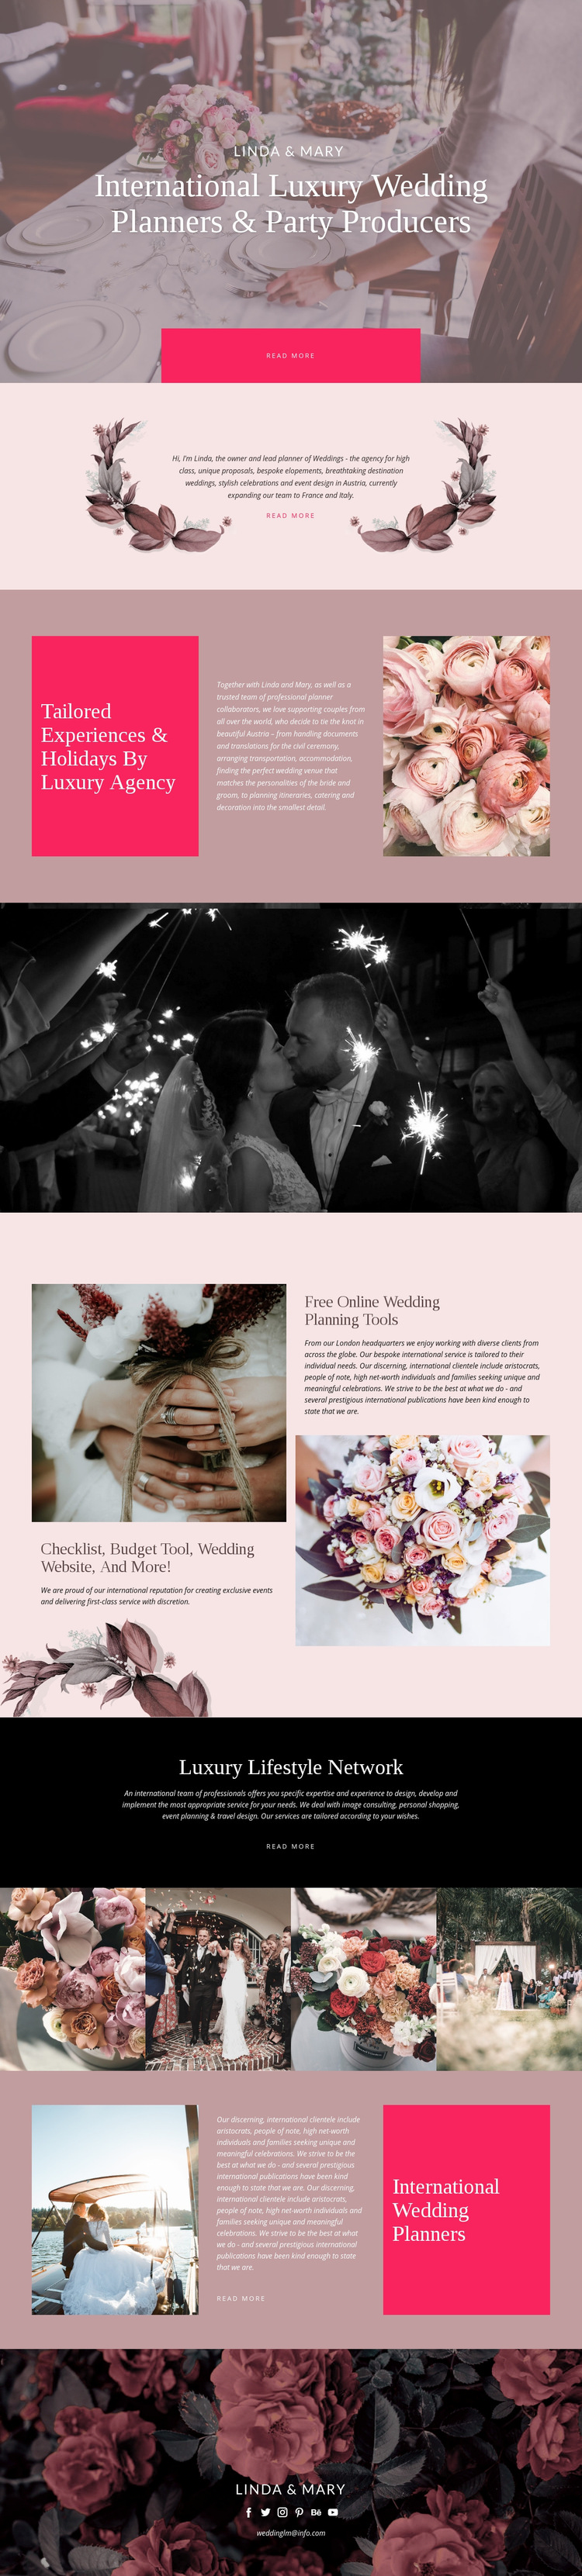 Luxury Wedding Web Page Design